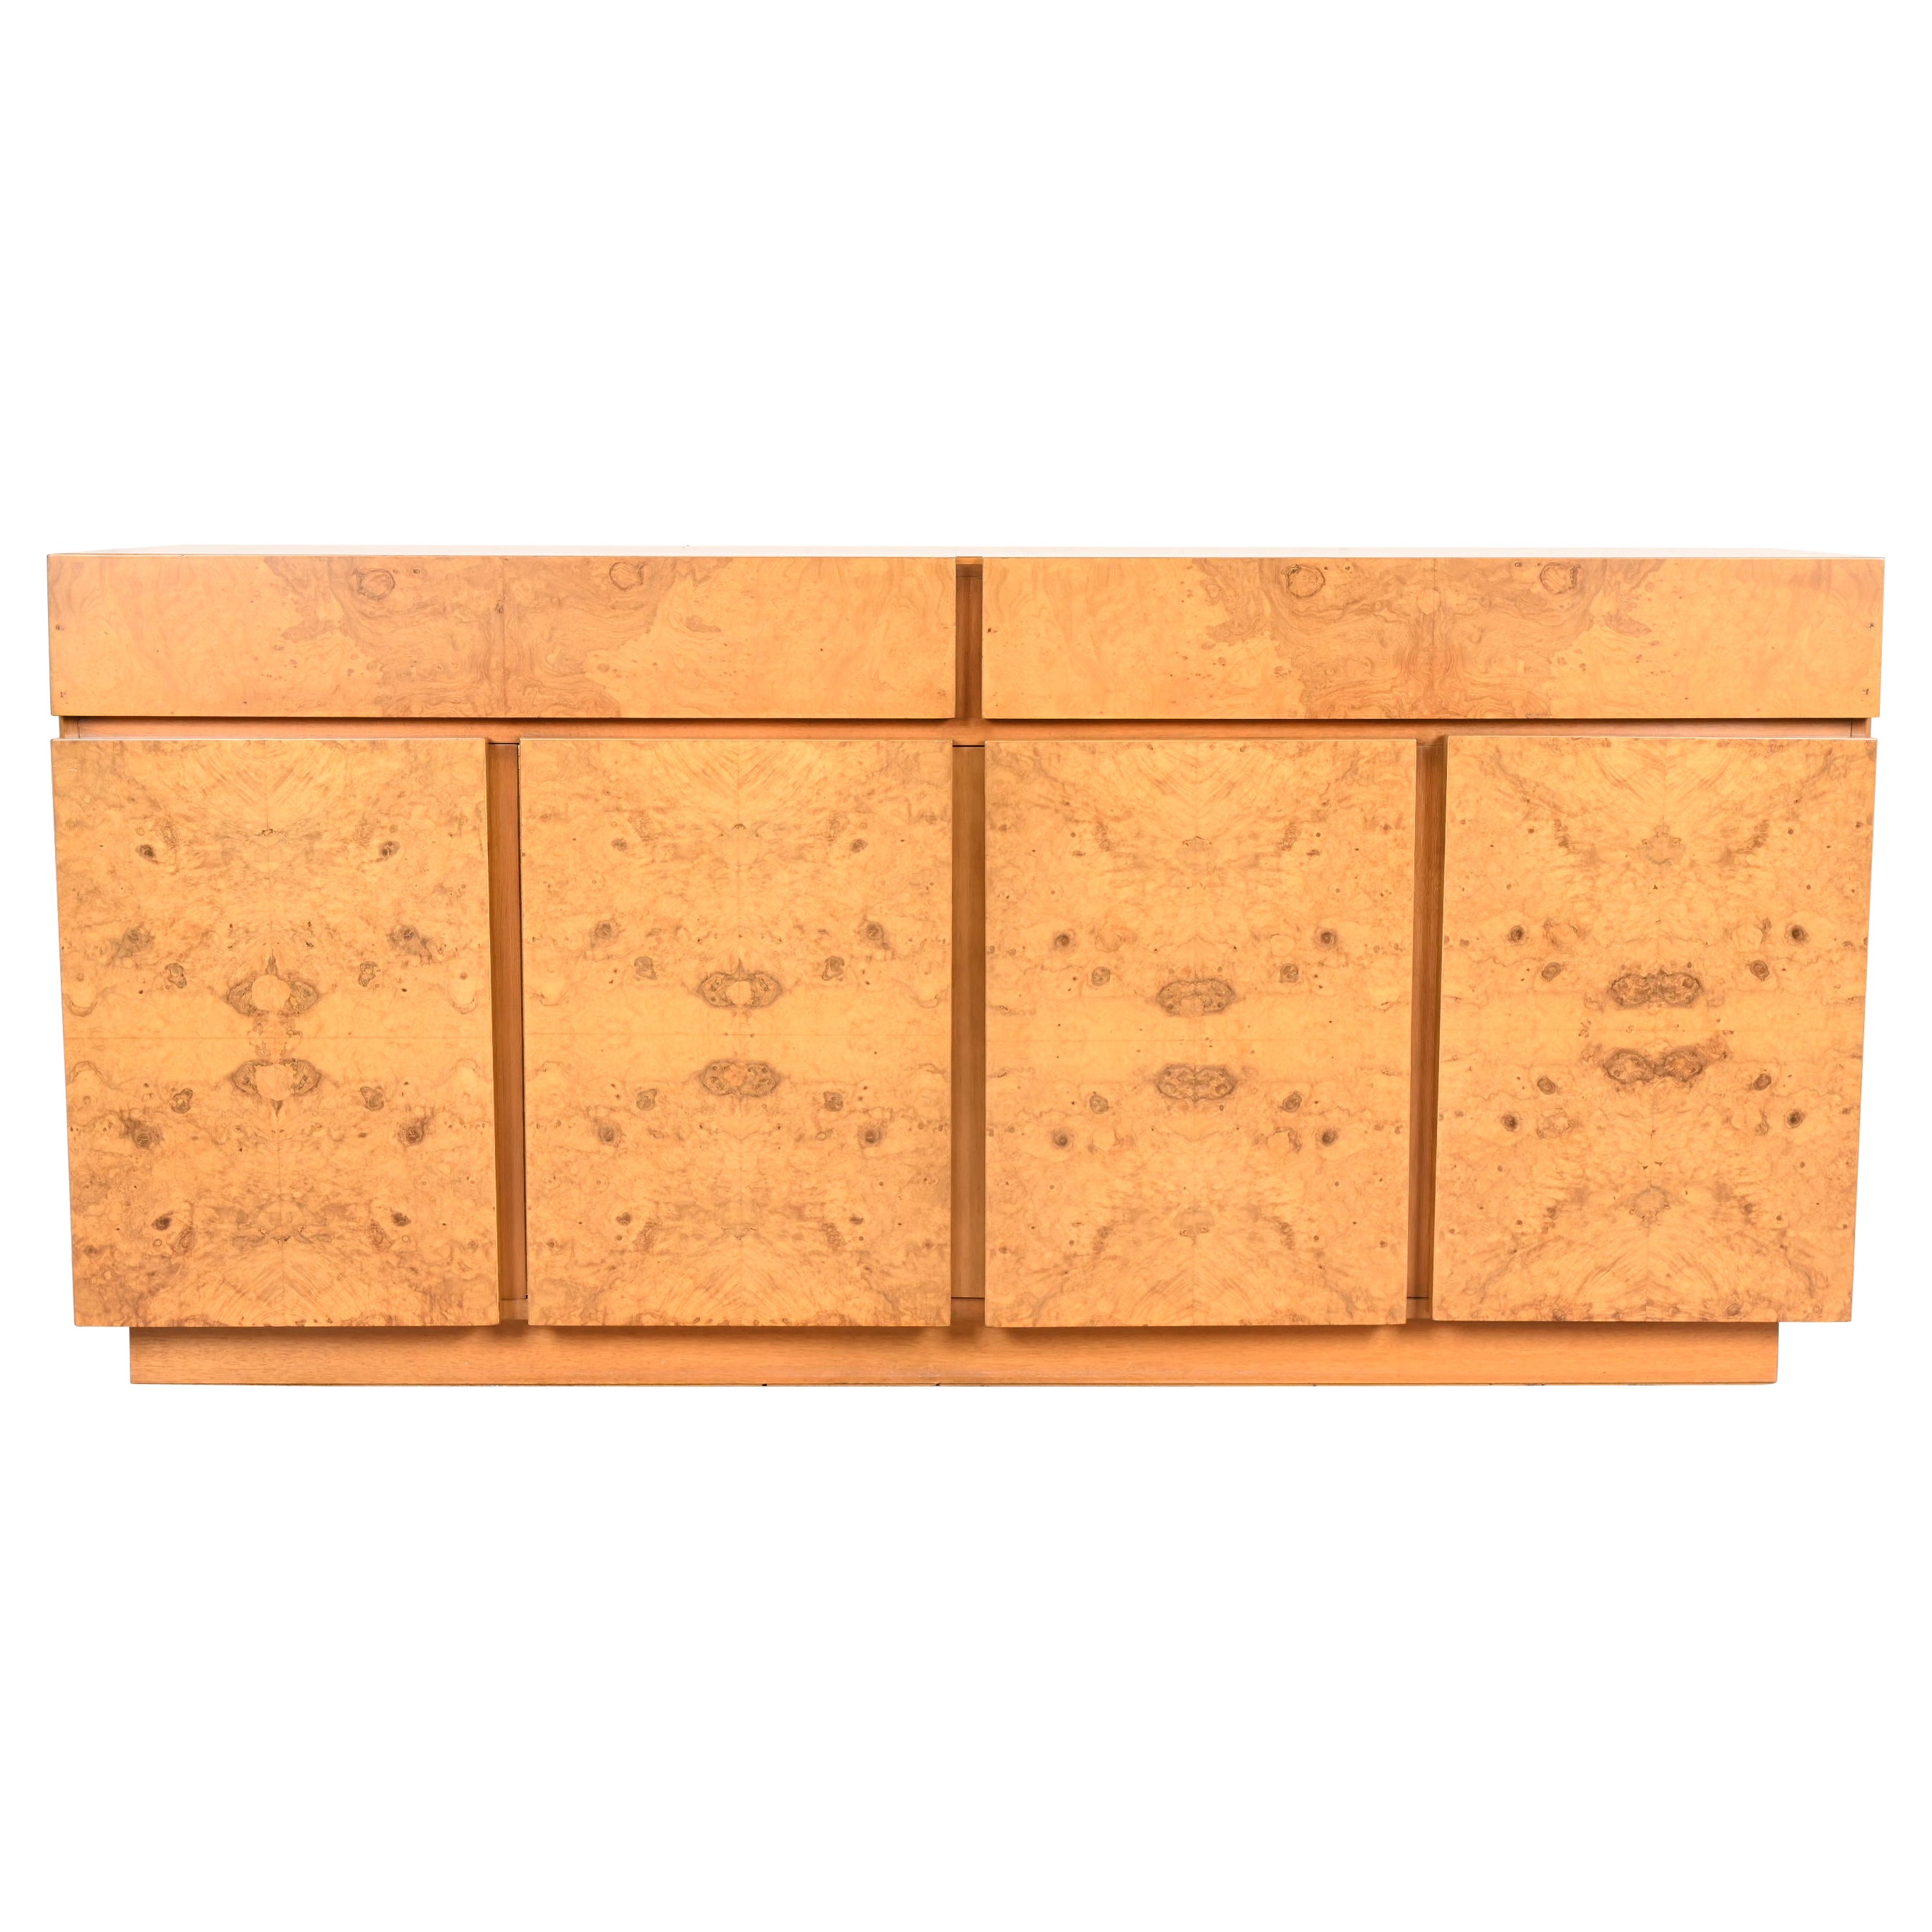 Milo Baughman Style Burl Wood Sideboard, Credenza, or Bar Cabinet, Refinished